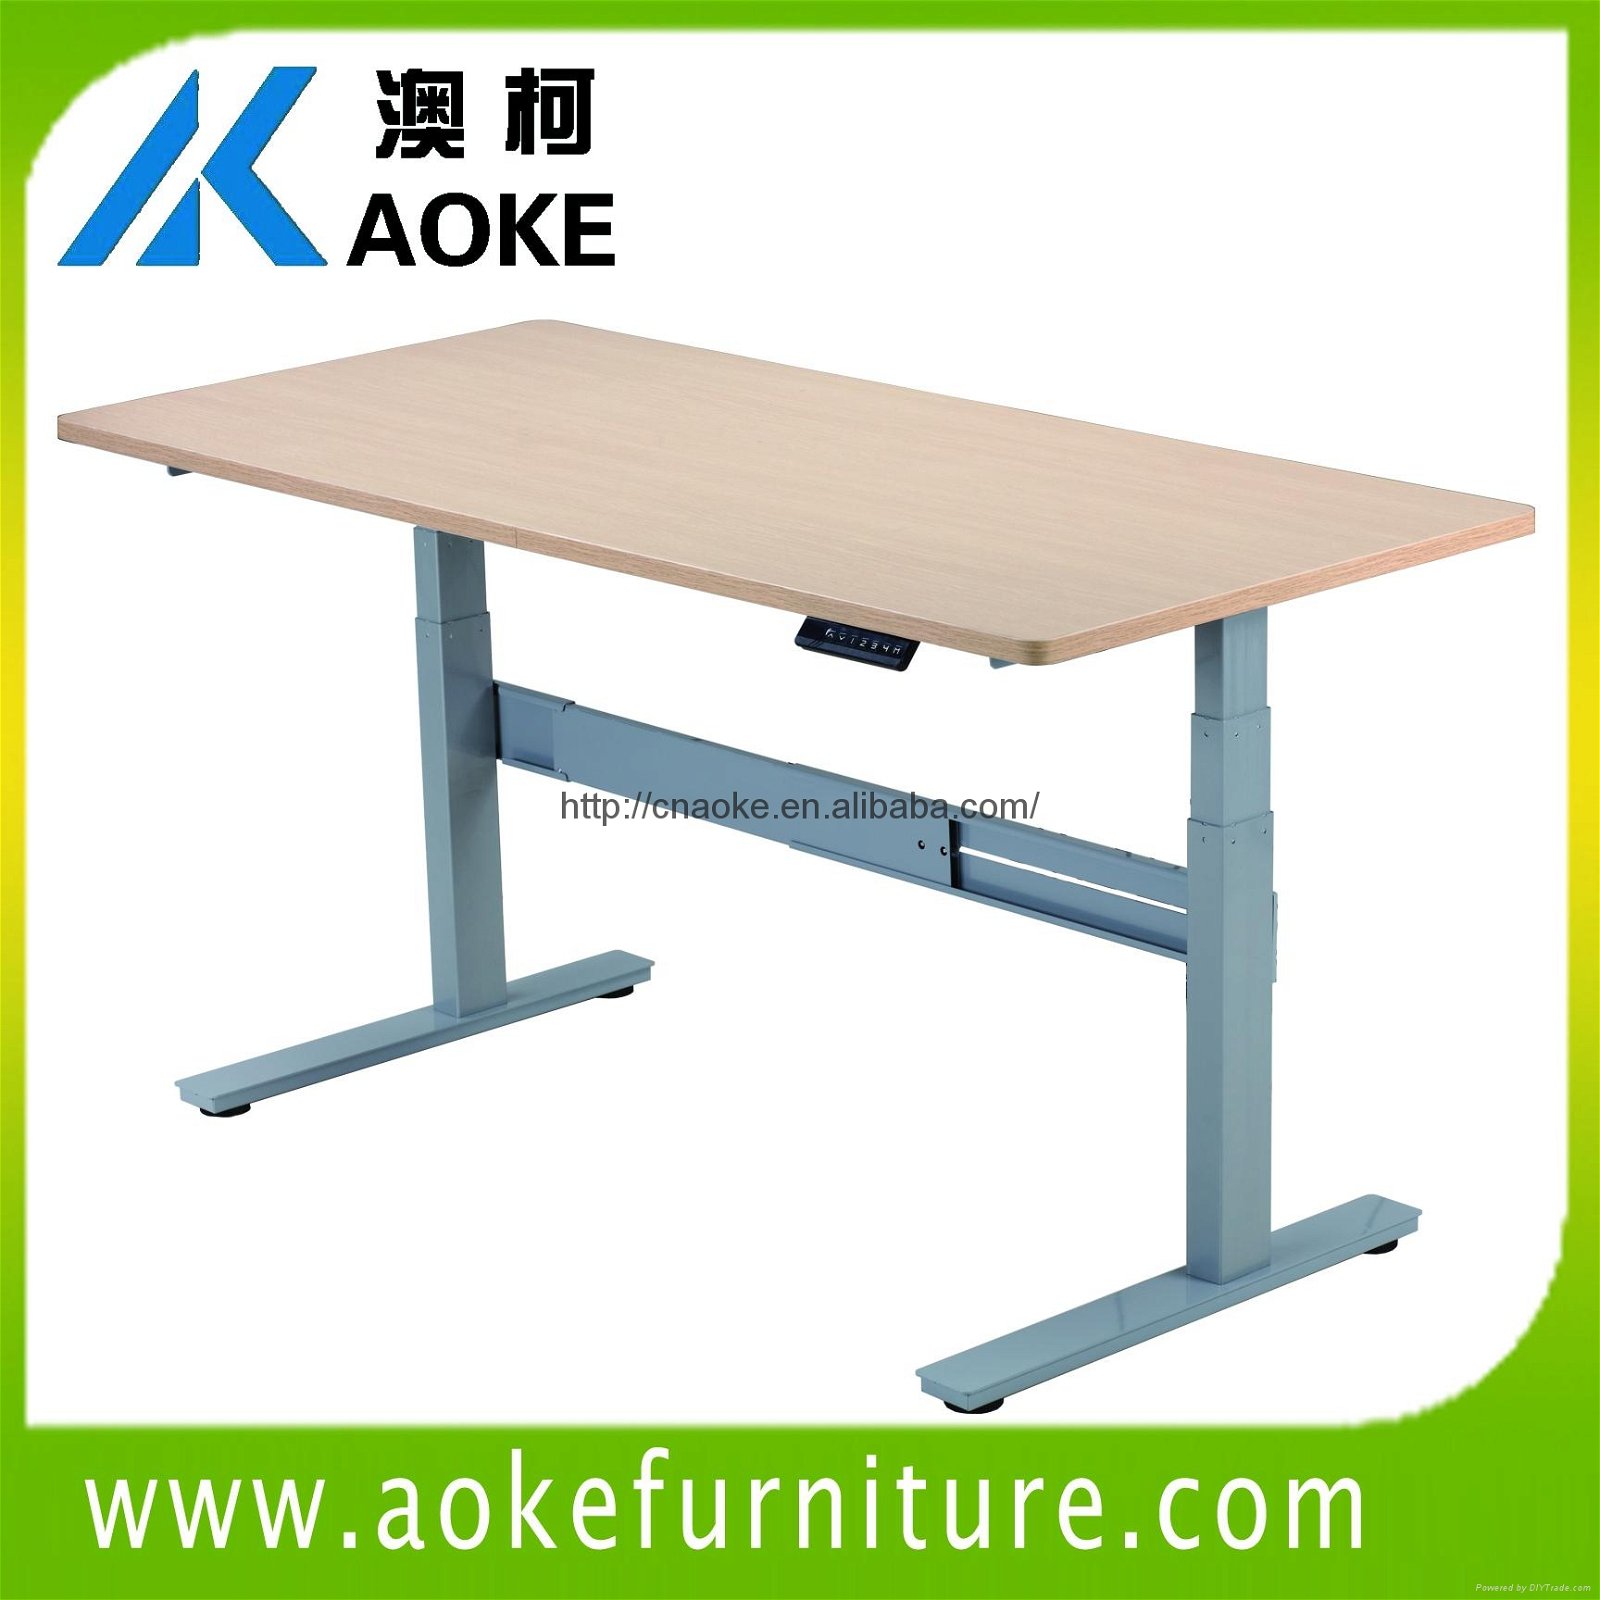 AOKE AK2RT-ZB2 adjustable height desks 3